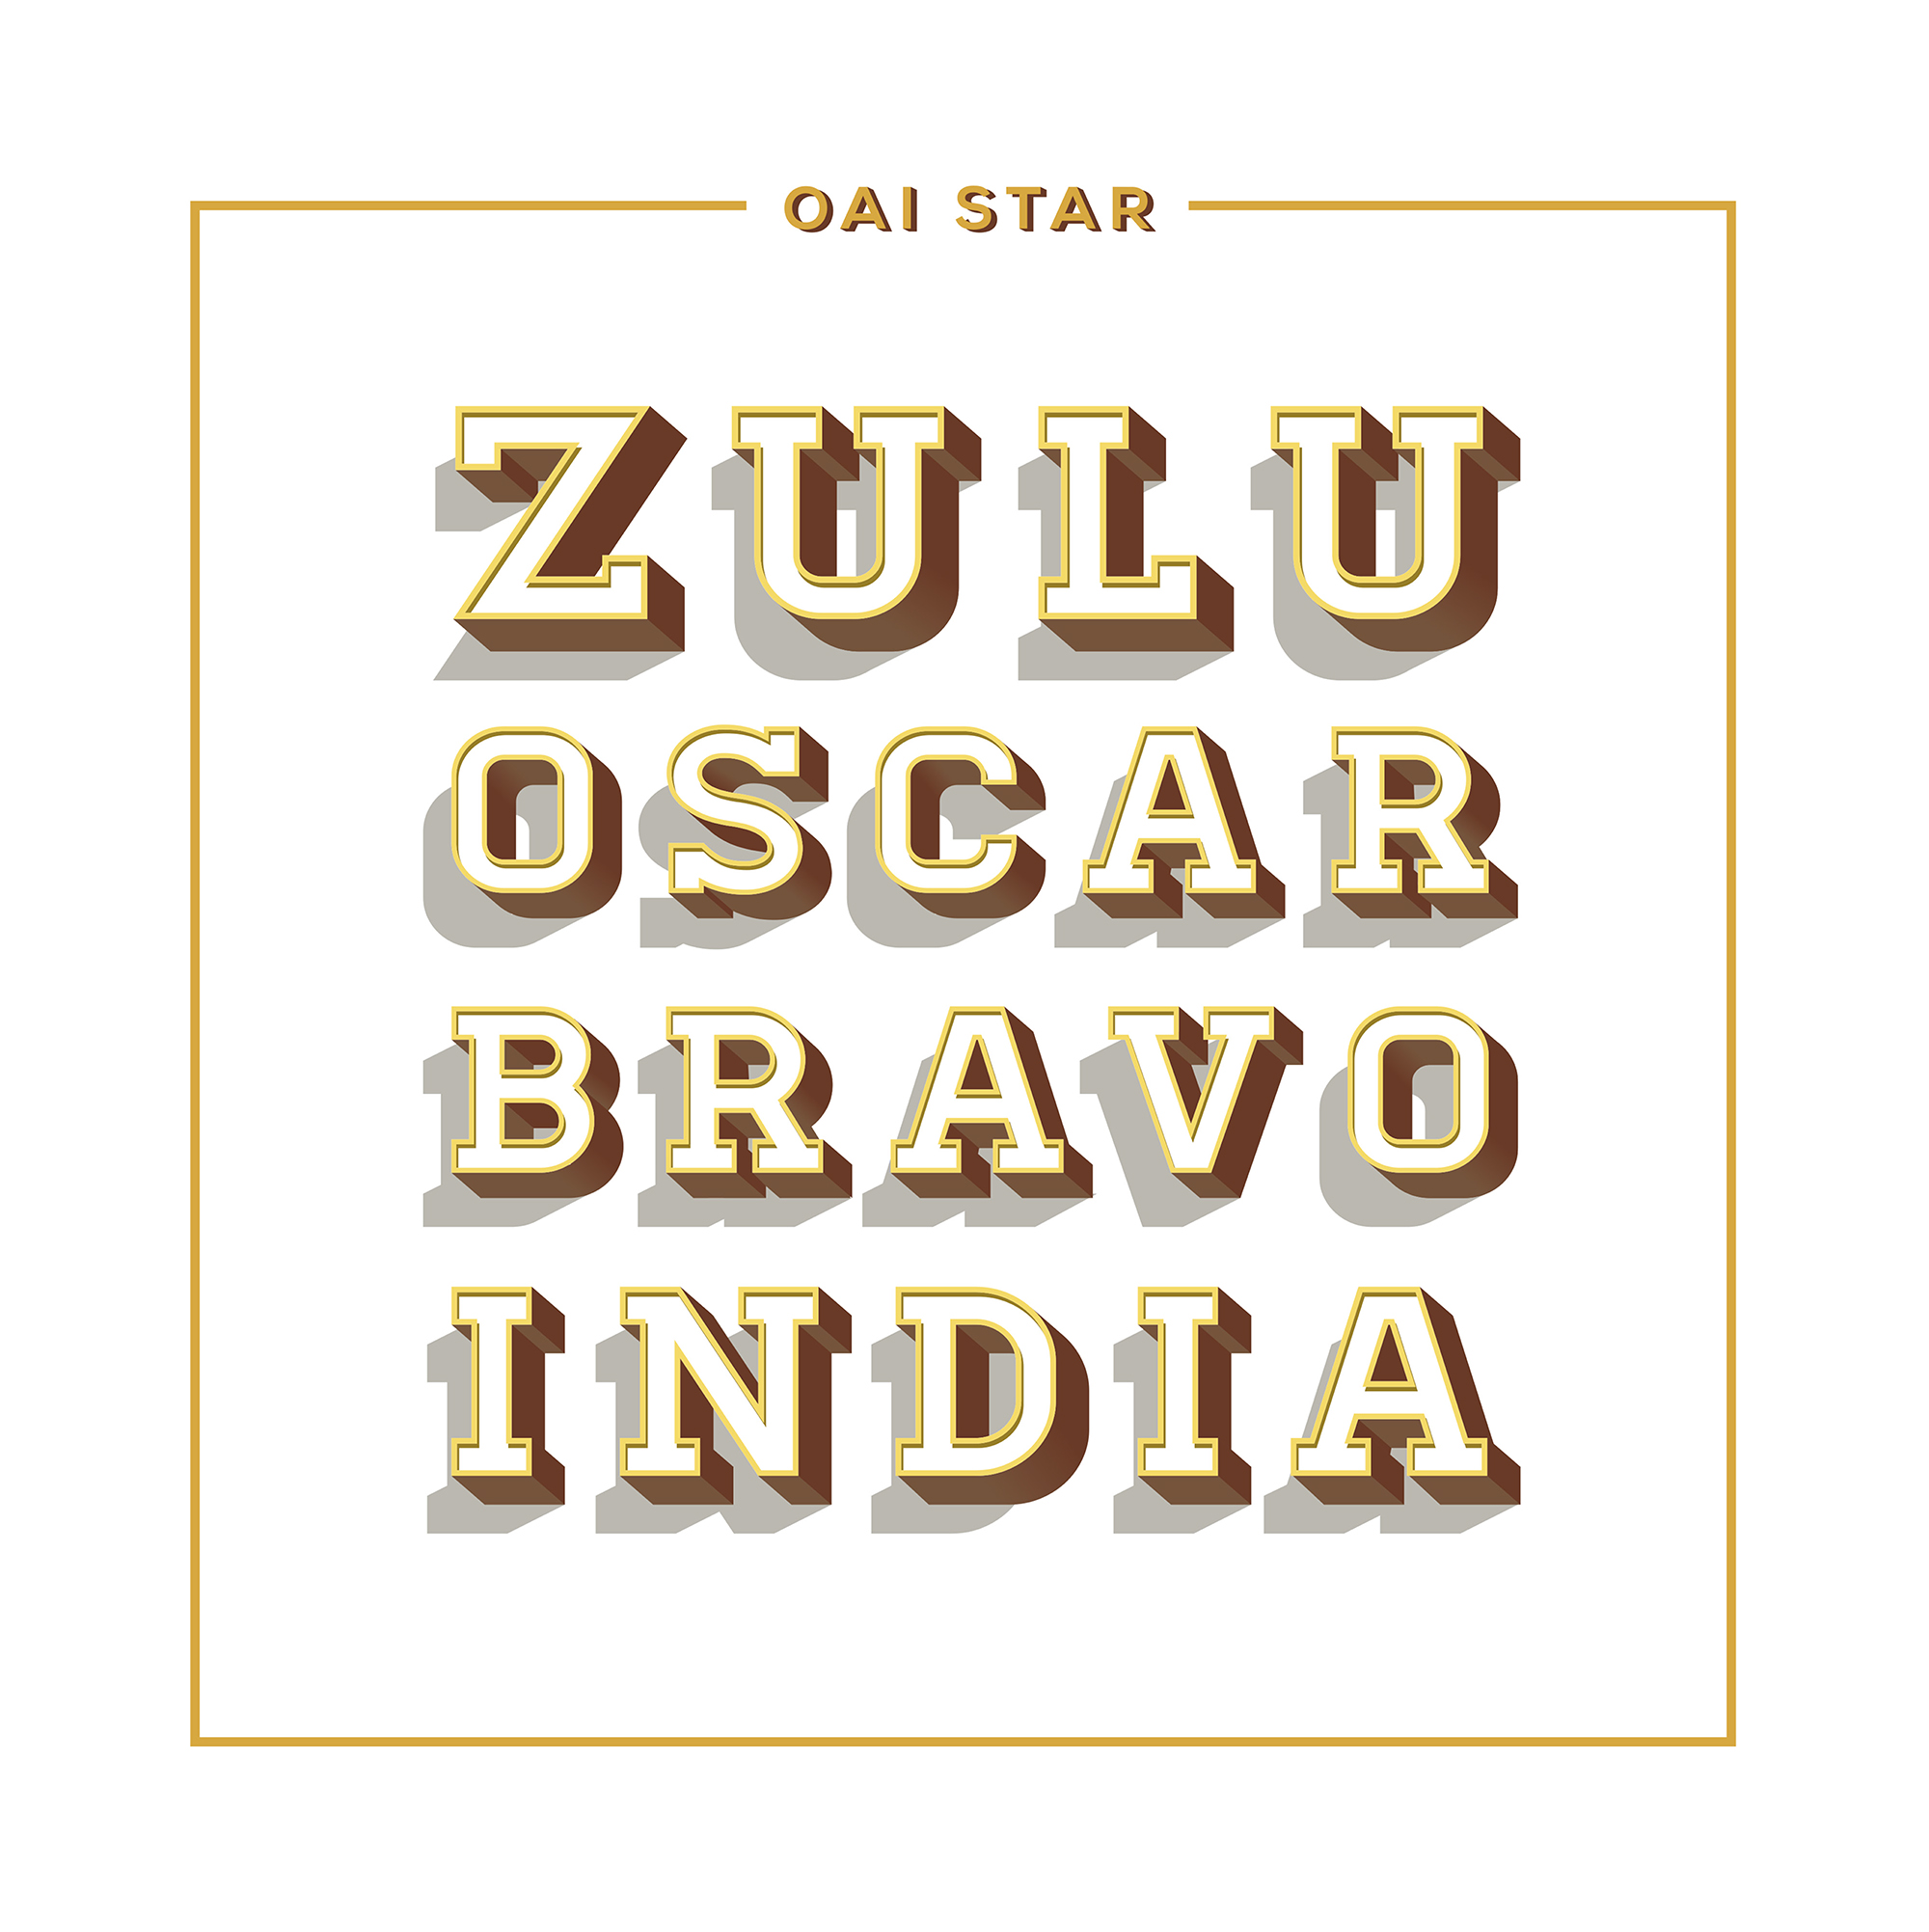 OAI STAR - Zulu Oscar Bravo India LP